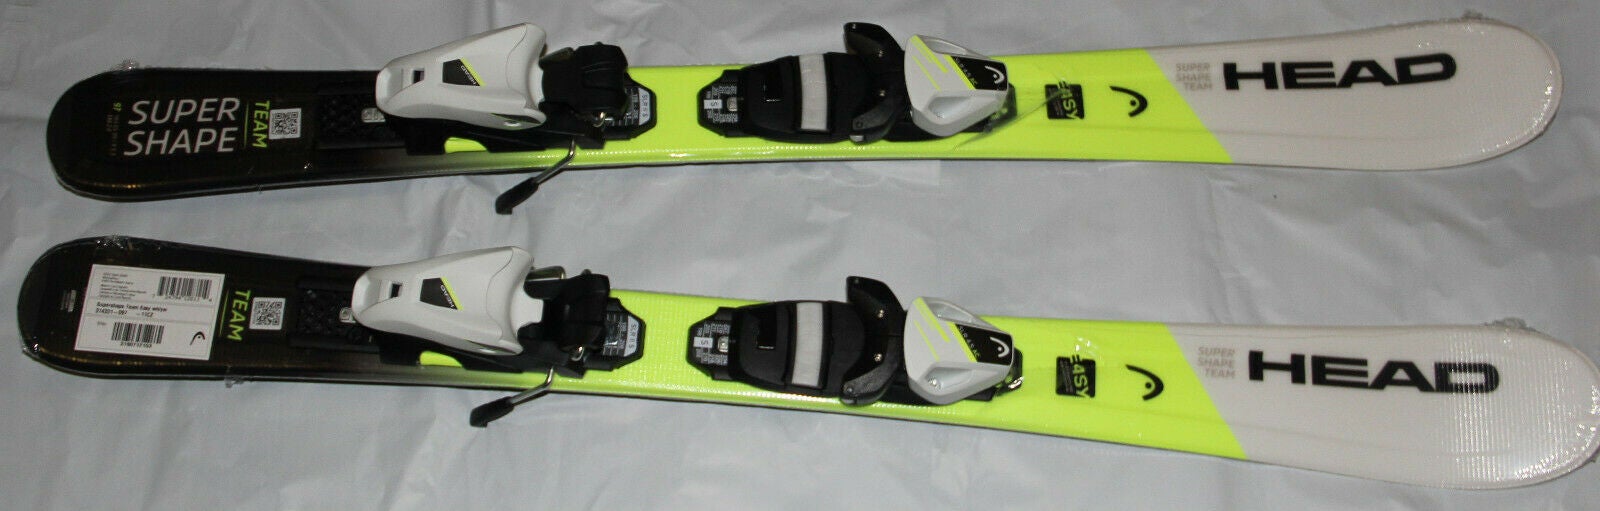 NEW HEAD Supershape team Easy kids skis 97cm + size adjustable bindings SLR4.5 NEW